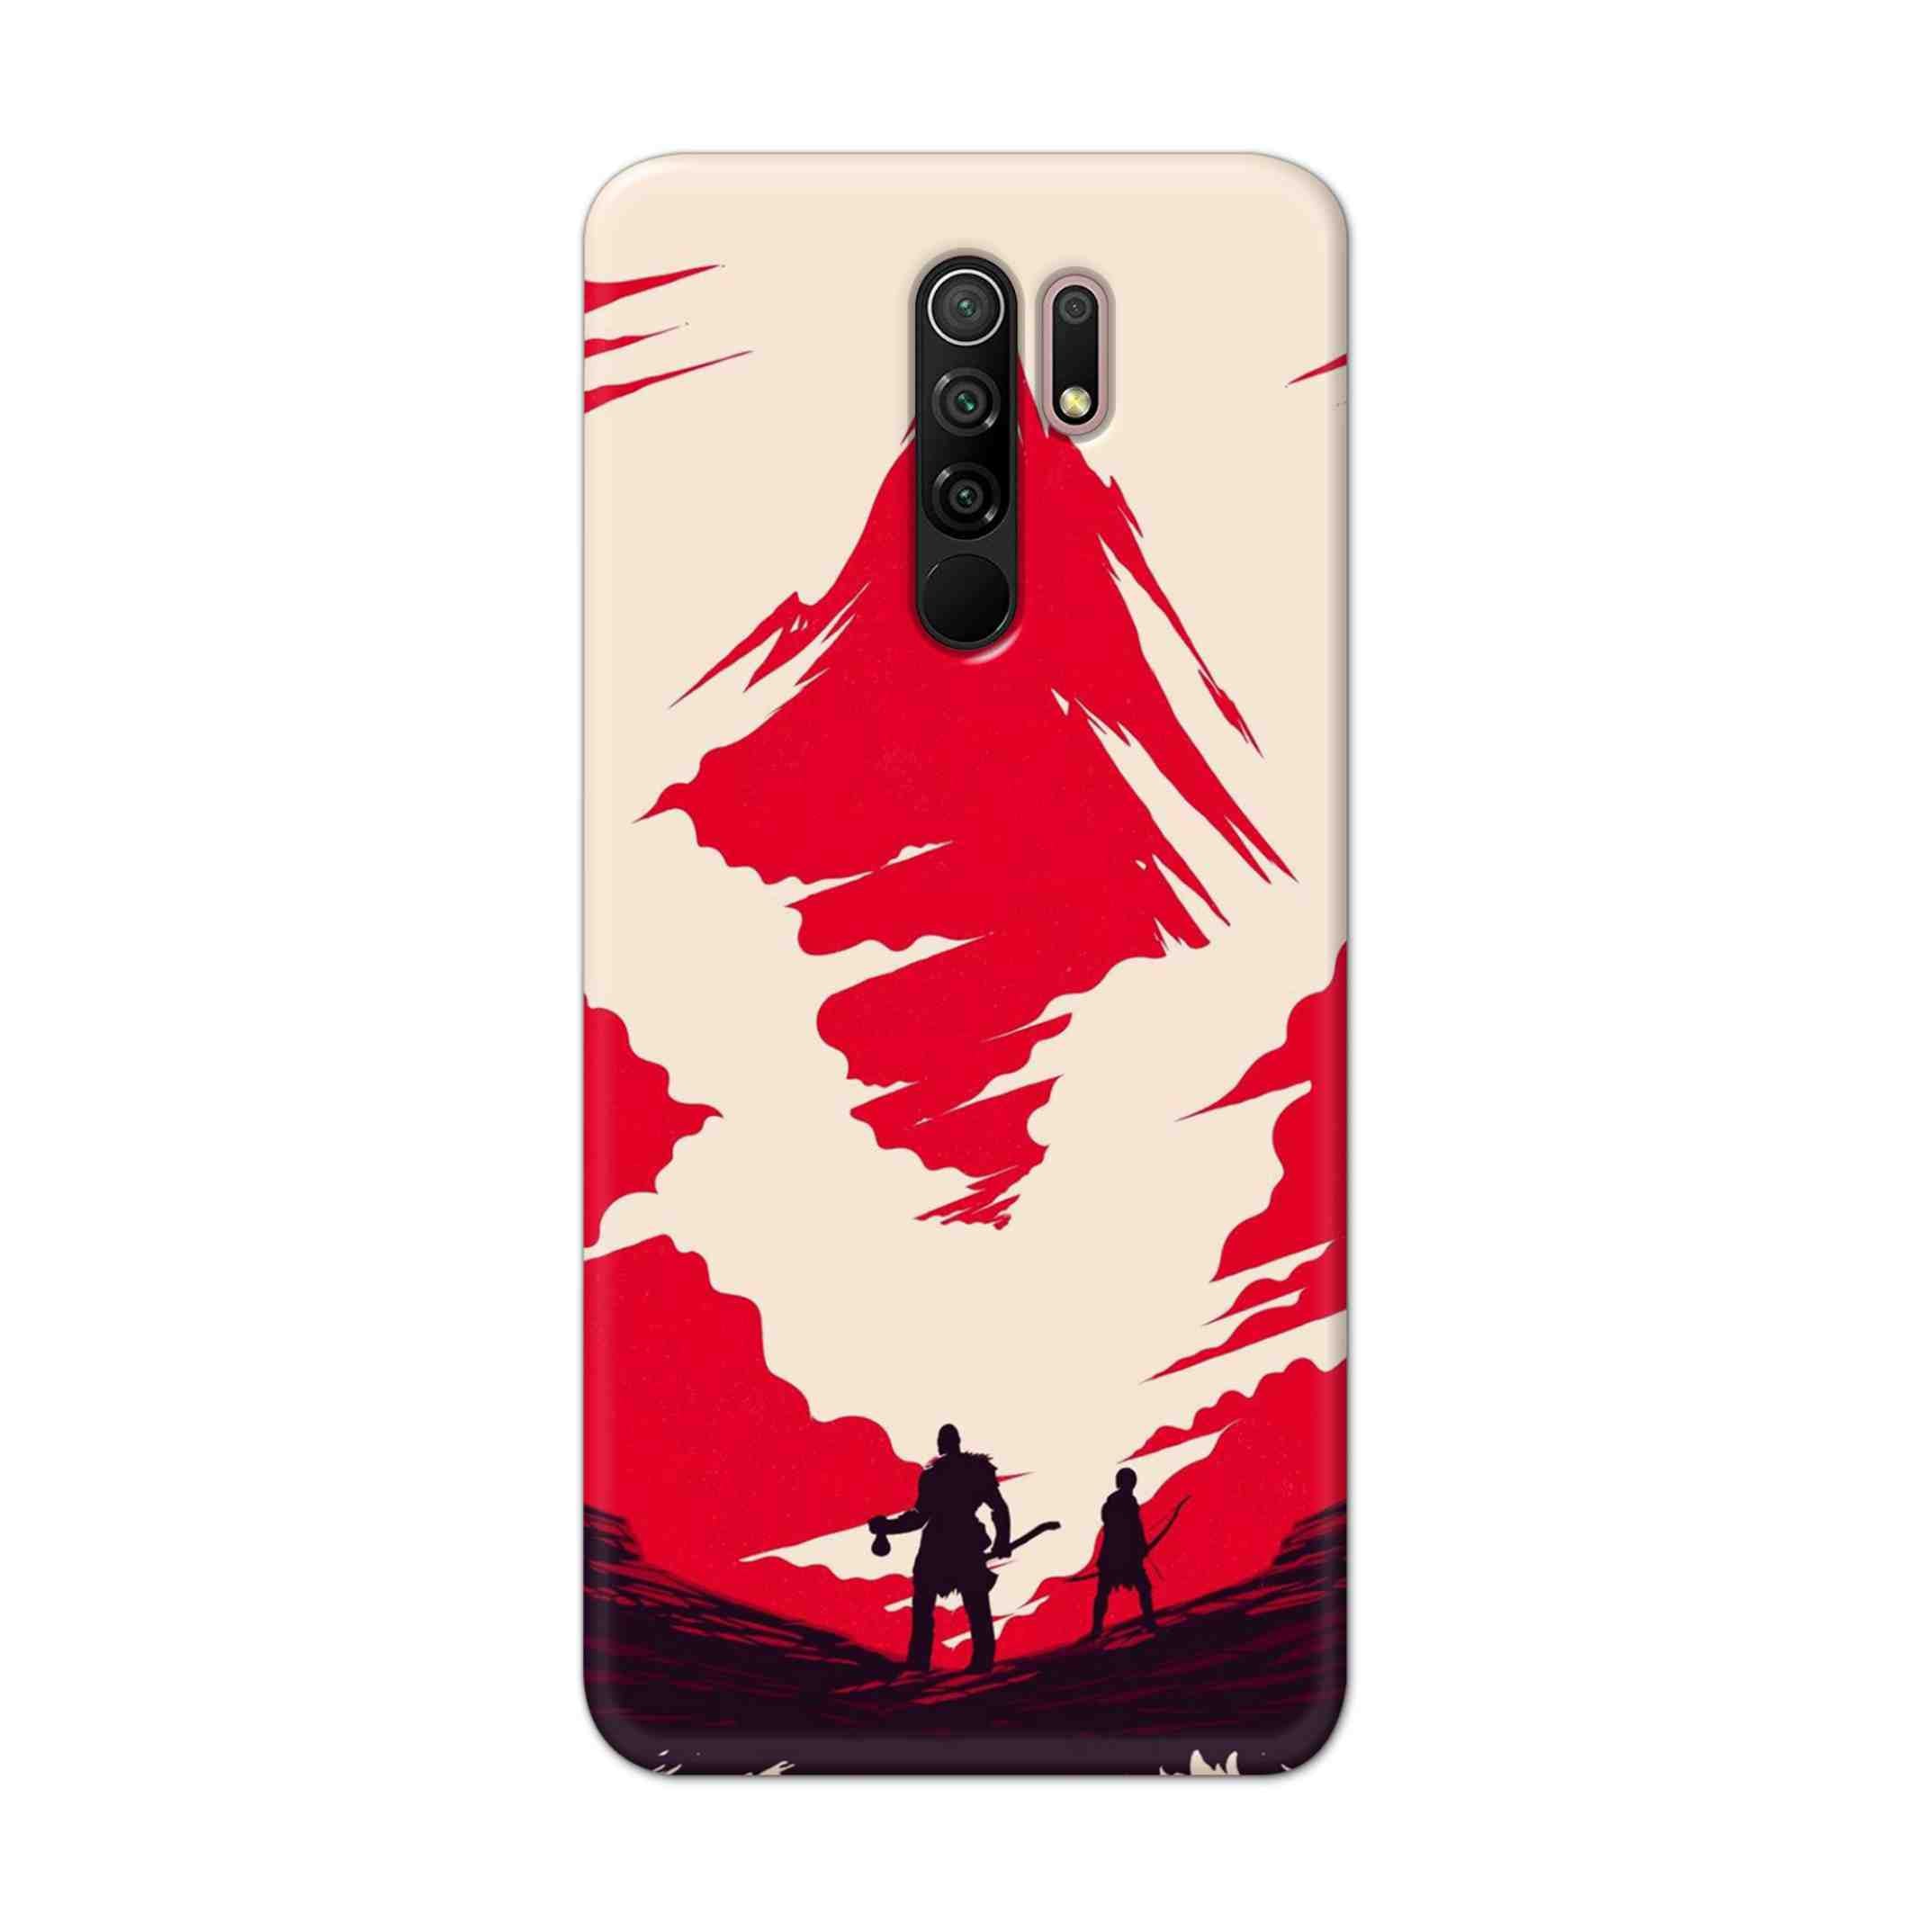 Buy God Of War Art Hard Back Mobile Phone Case Cover For Xiaomi Redmi 9 Prime Online